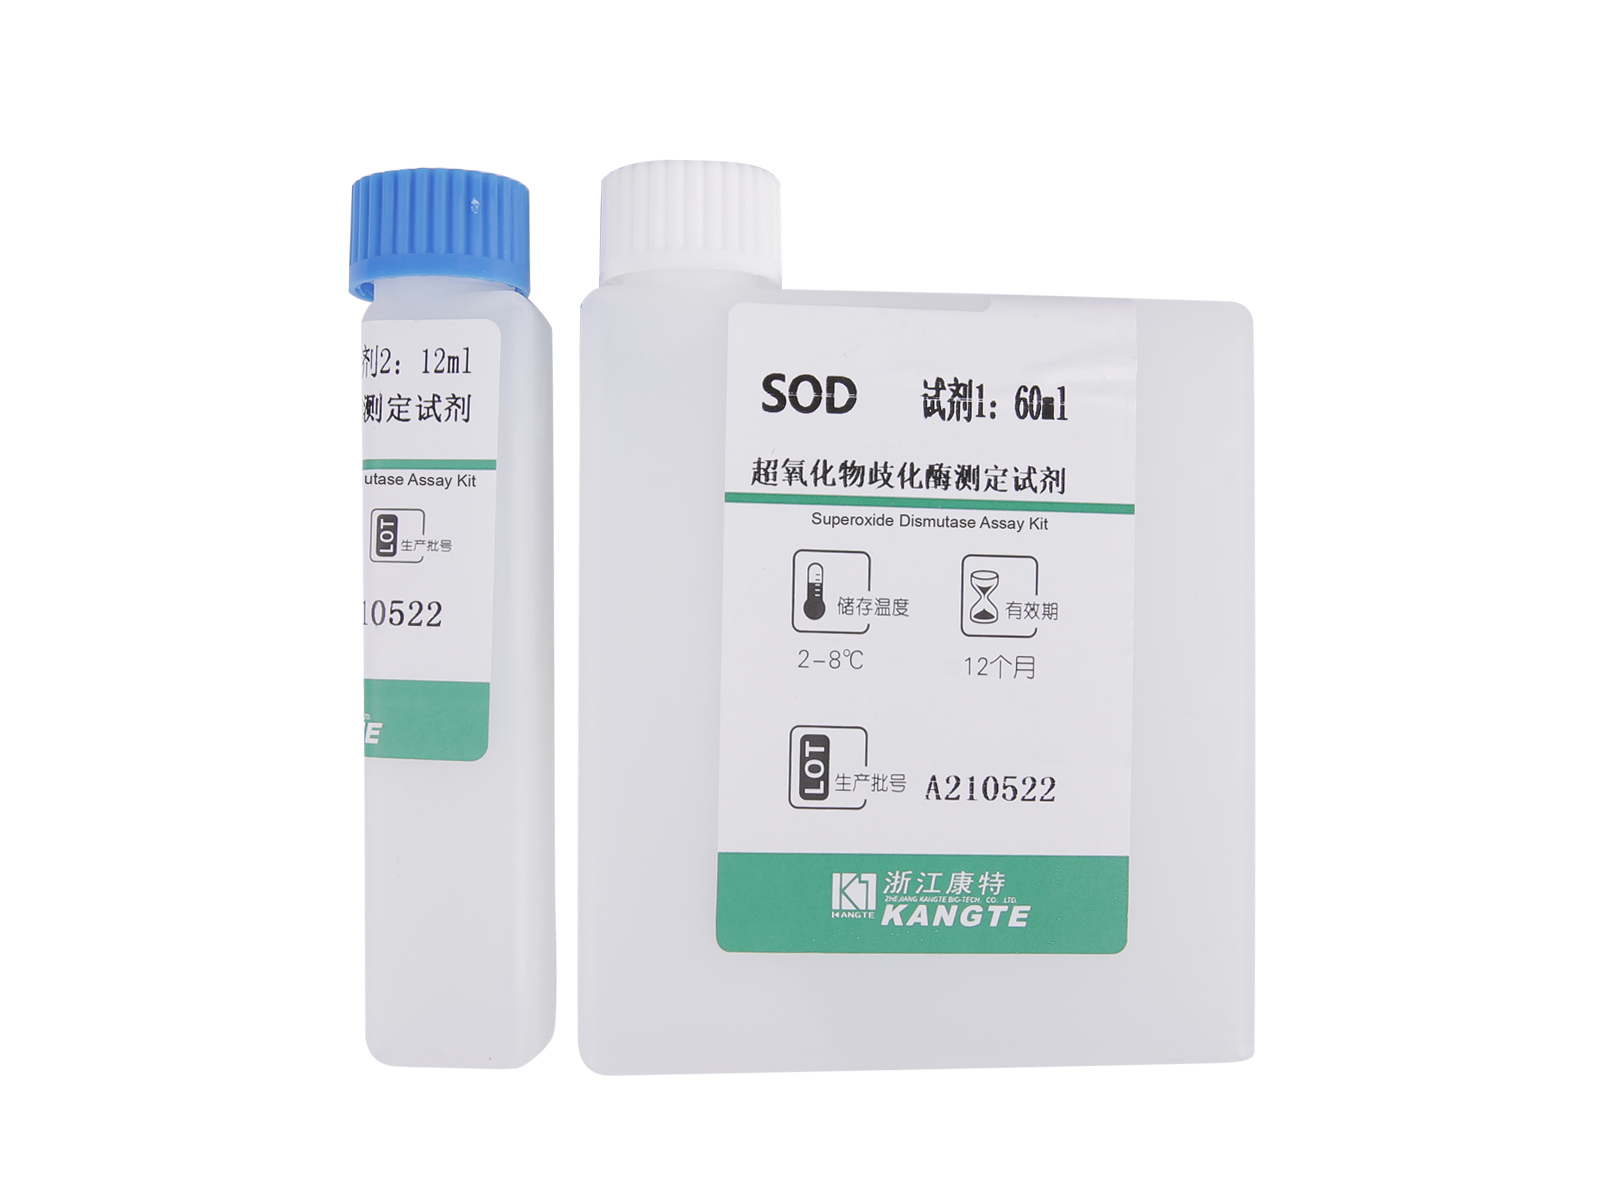 【SOD】 Superoxide Dismutase Assay Kit (kolorimetrisk metod)